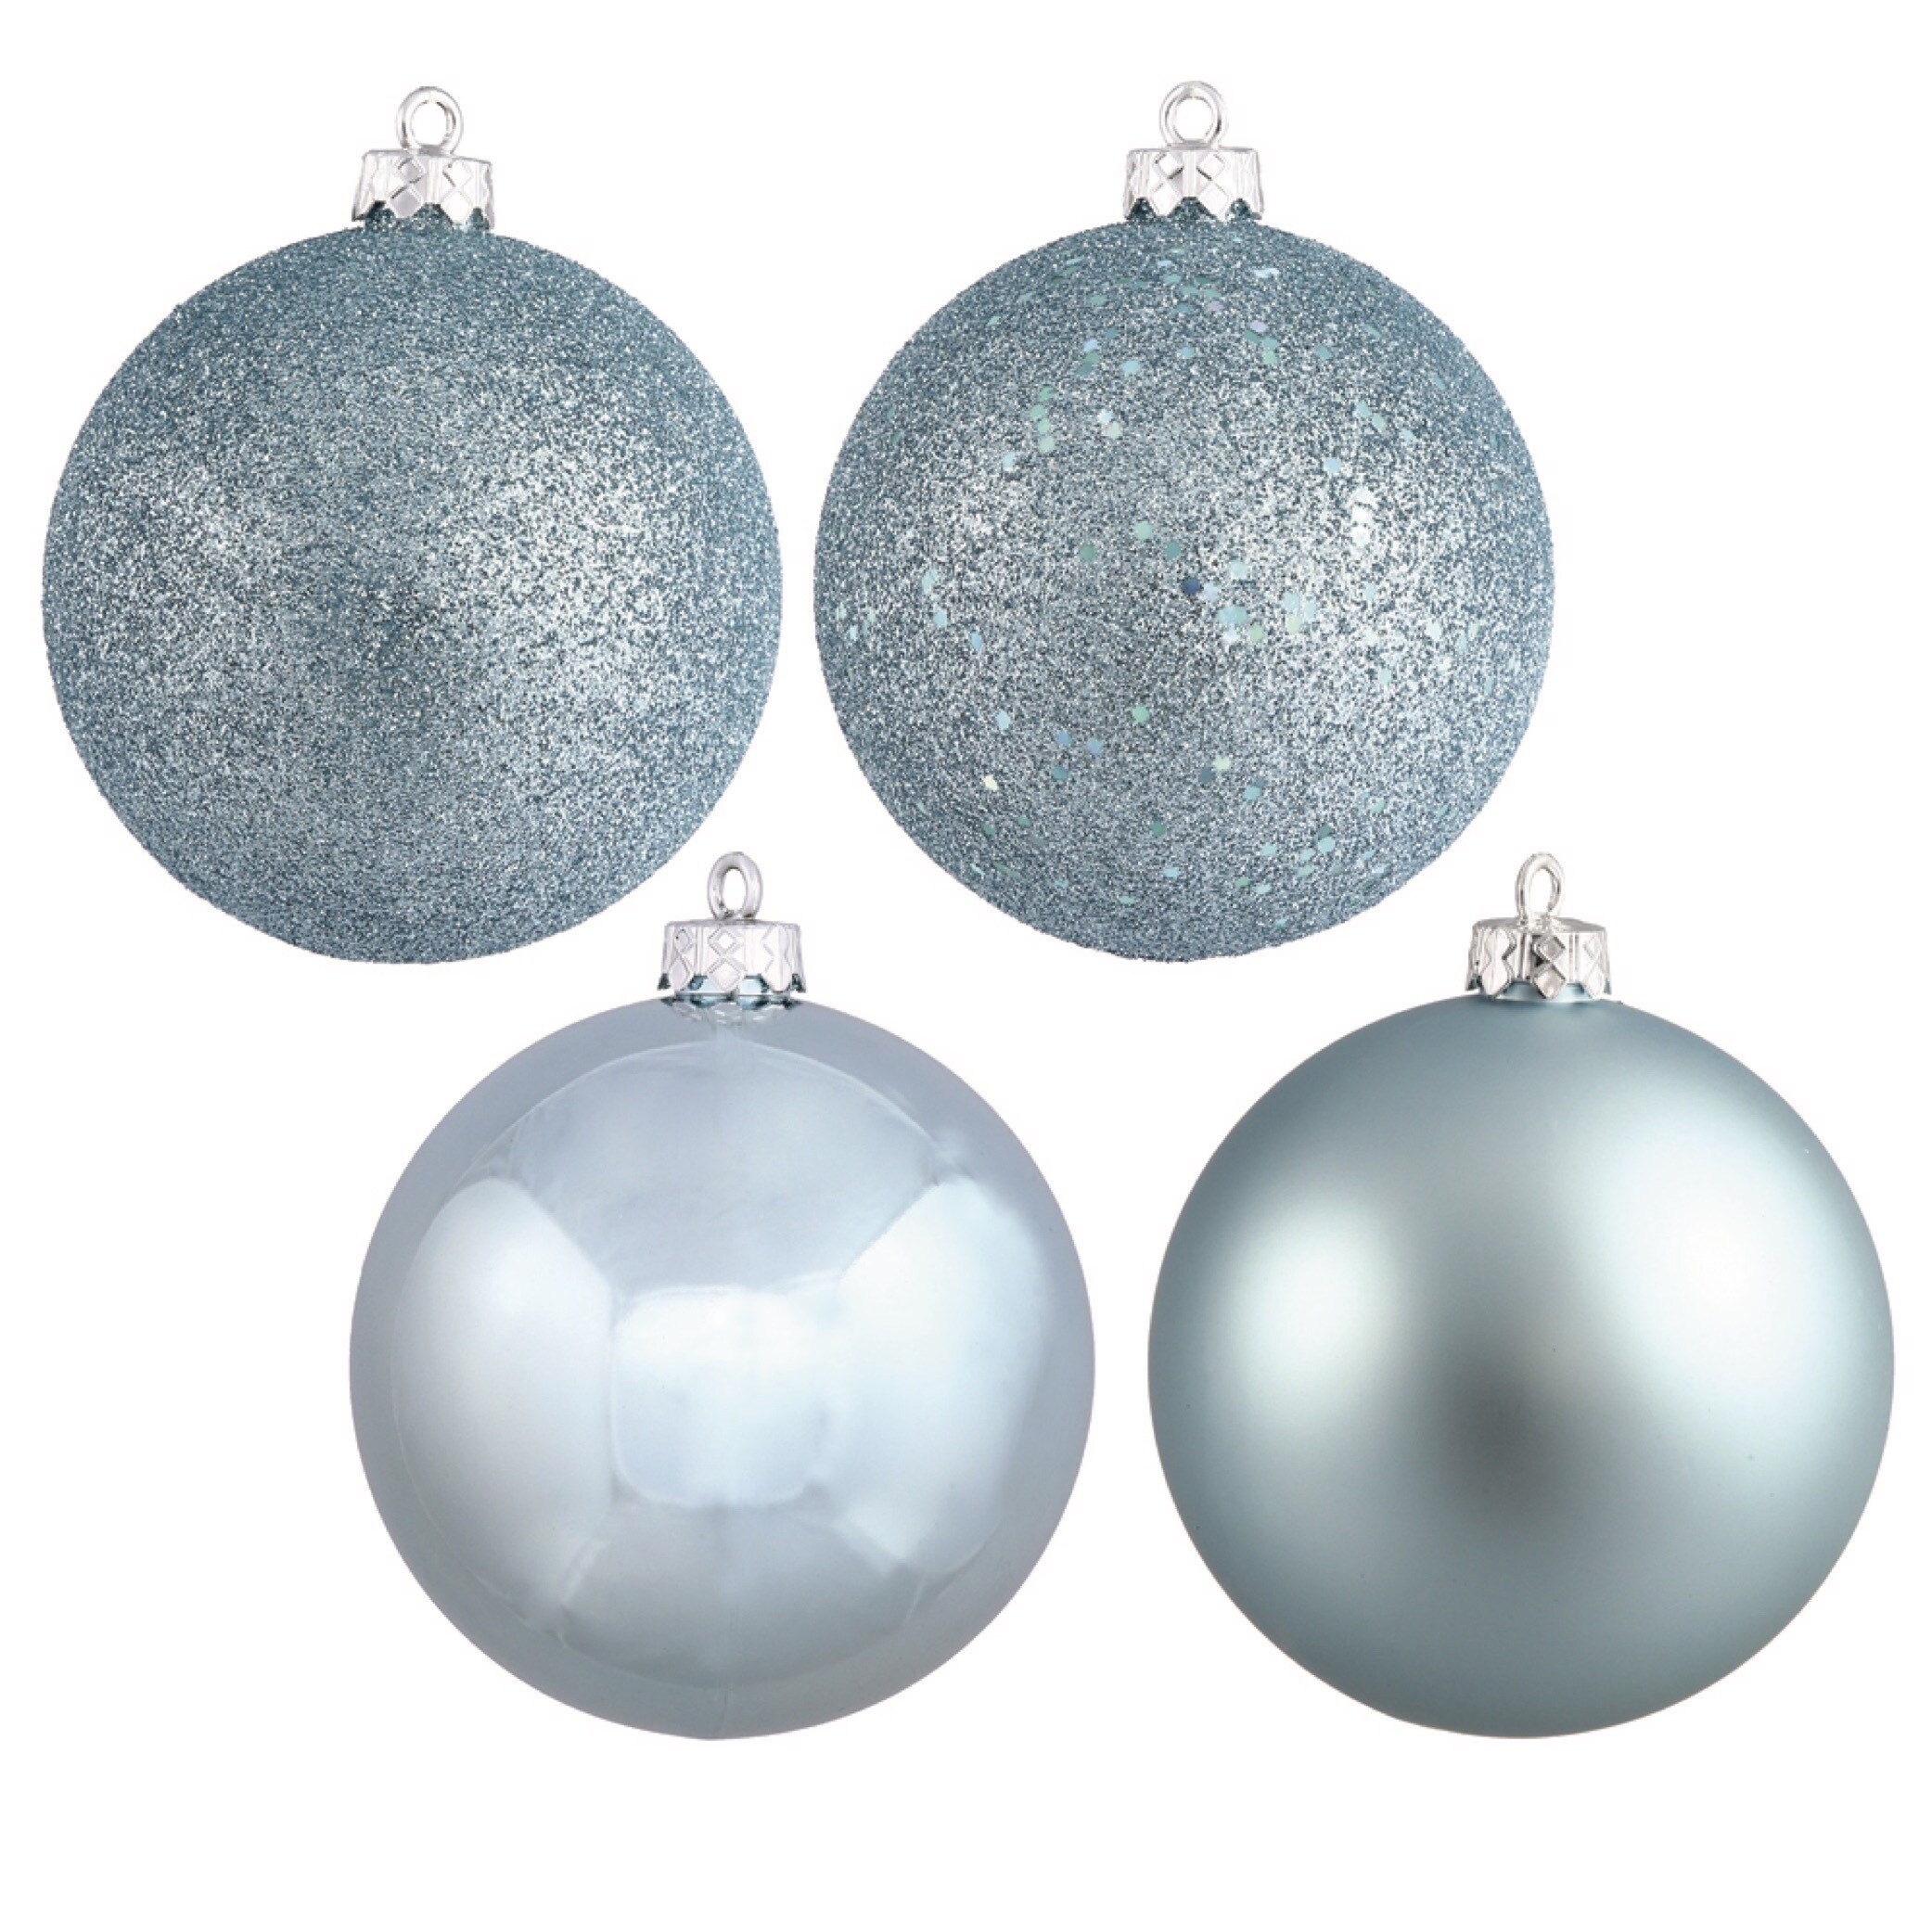 light blue ornament balls